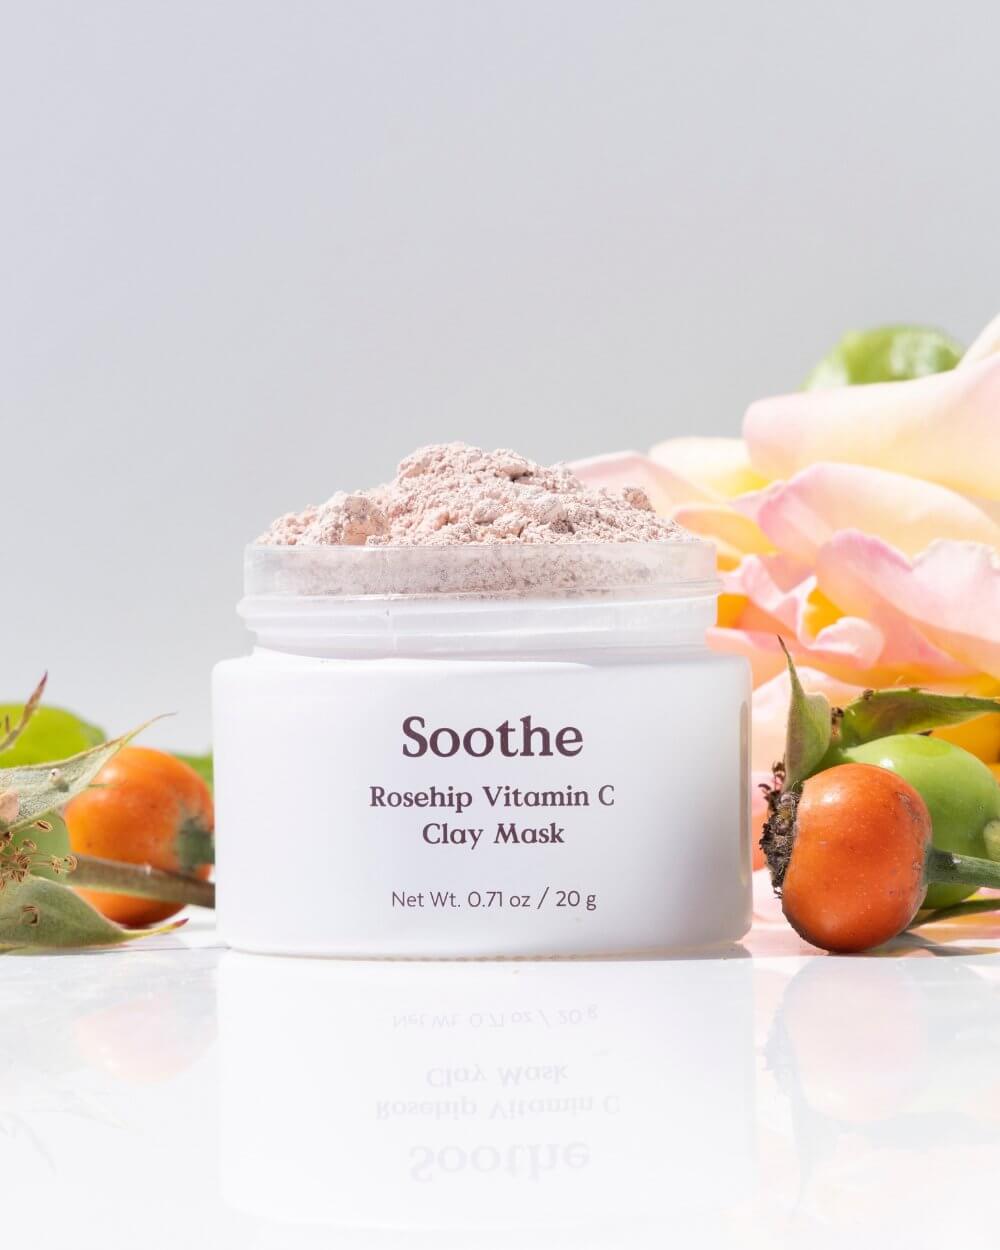 Soothe Rosehip Vitamin C Clay Mask Three Ships MASKS Natural Vegan Cruelty-free Skincare